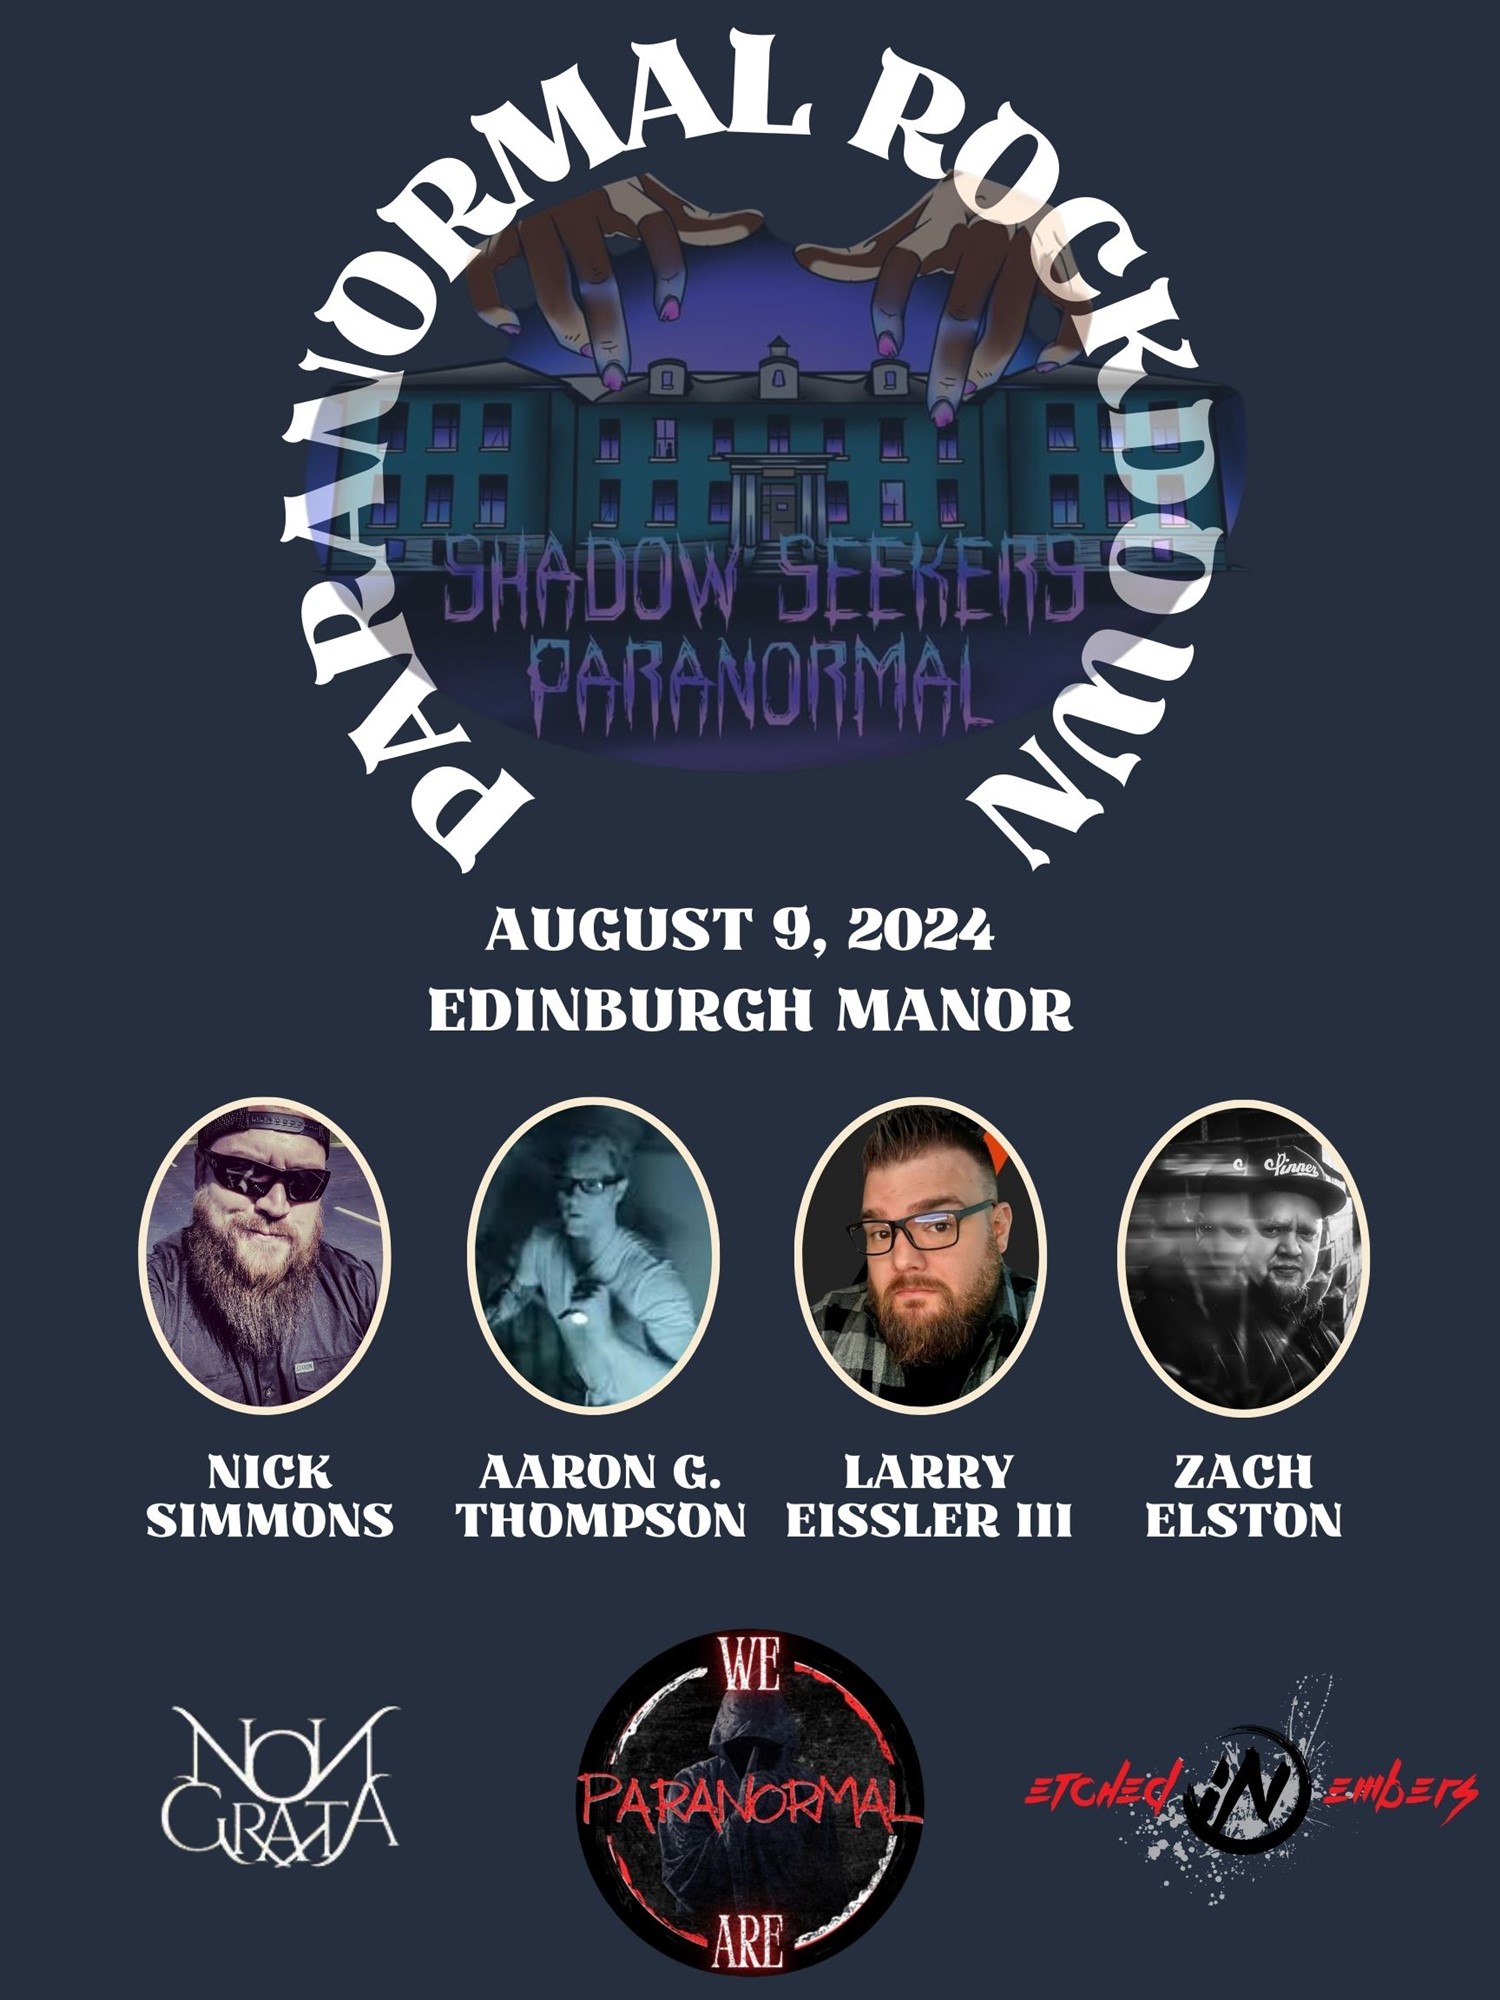 PARANORMAL ROCKDOWN EDINBURGH MANOR on août 09, 16:00@EDINBURGH MANOR - Achetez des billets et obtenez des informations surShadow seekers paranormal 